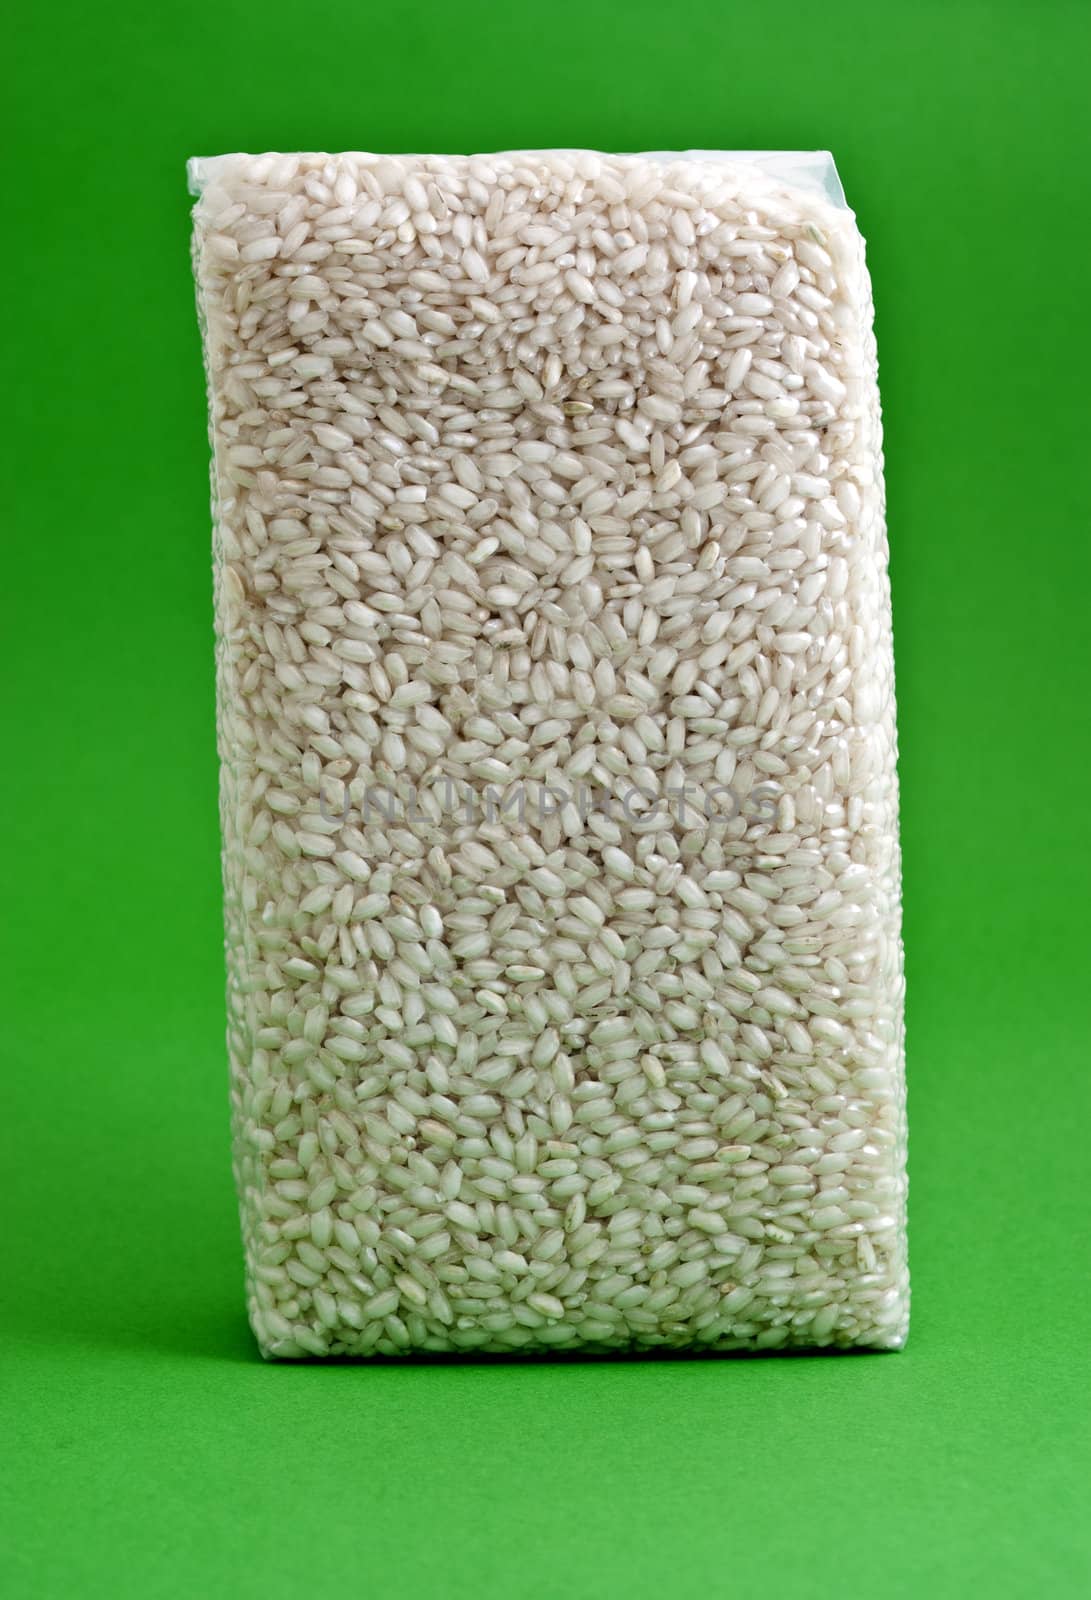 vacuum packed rice